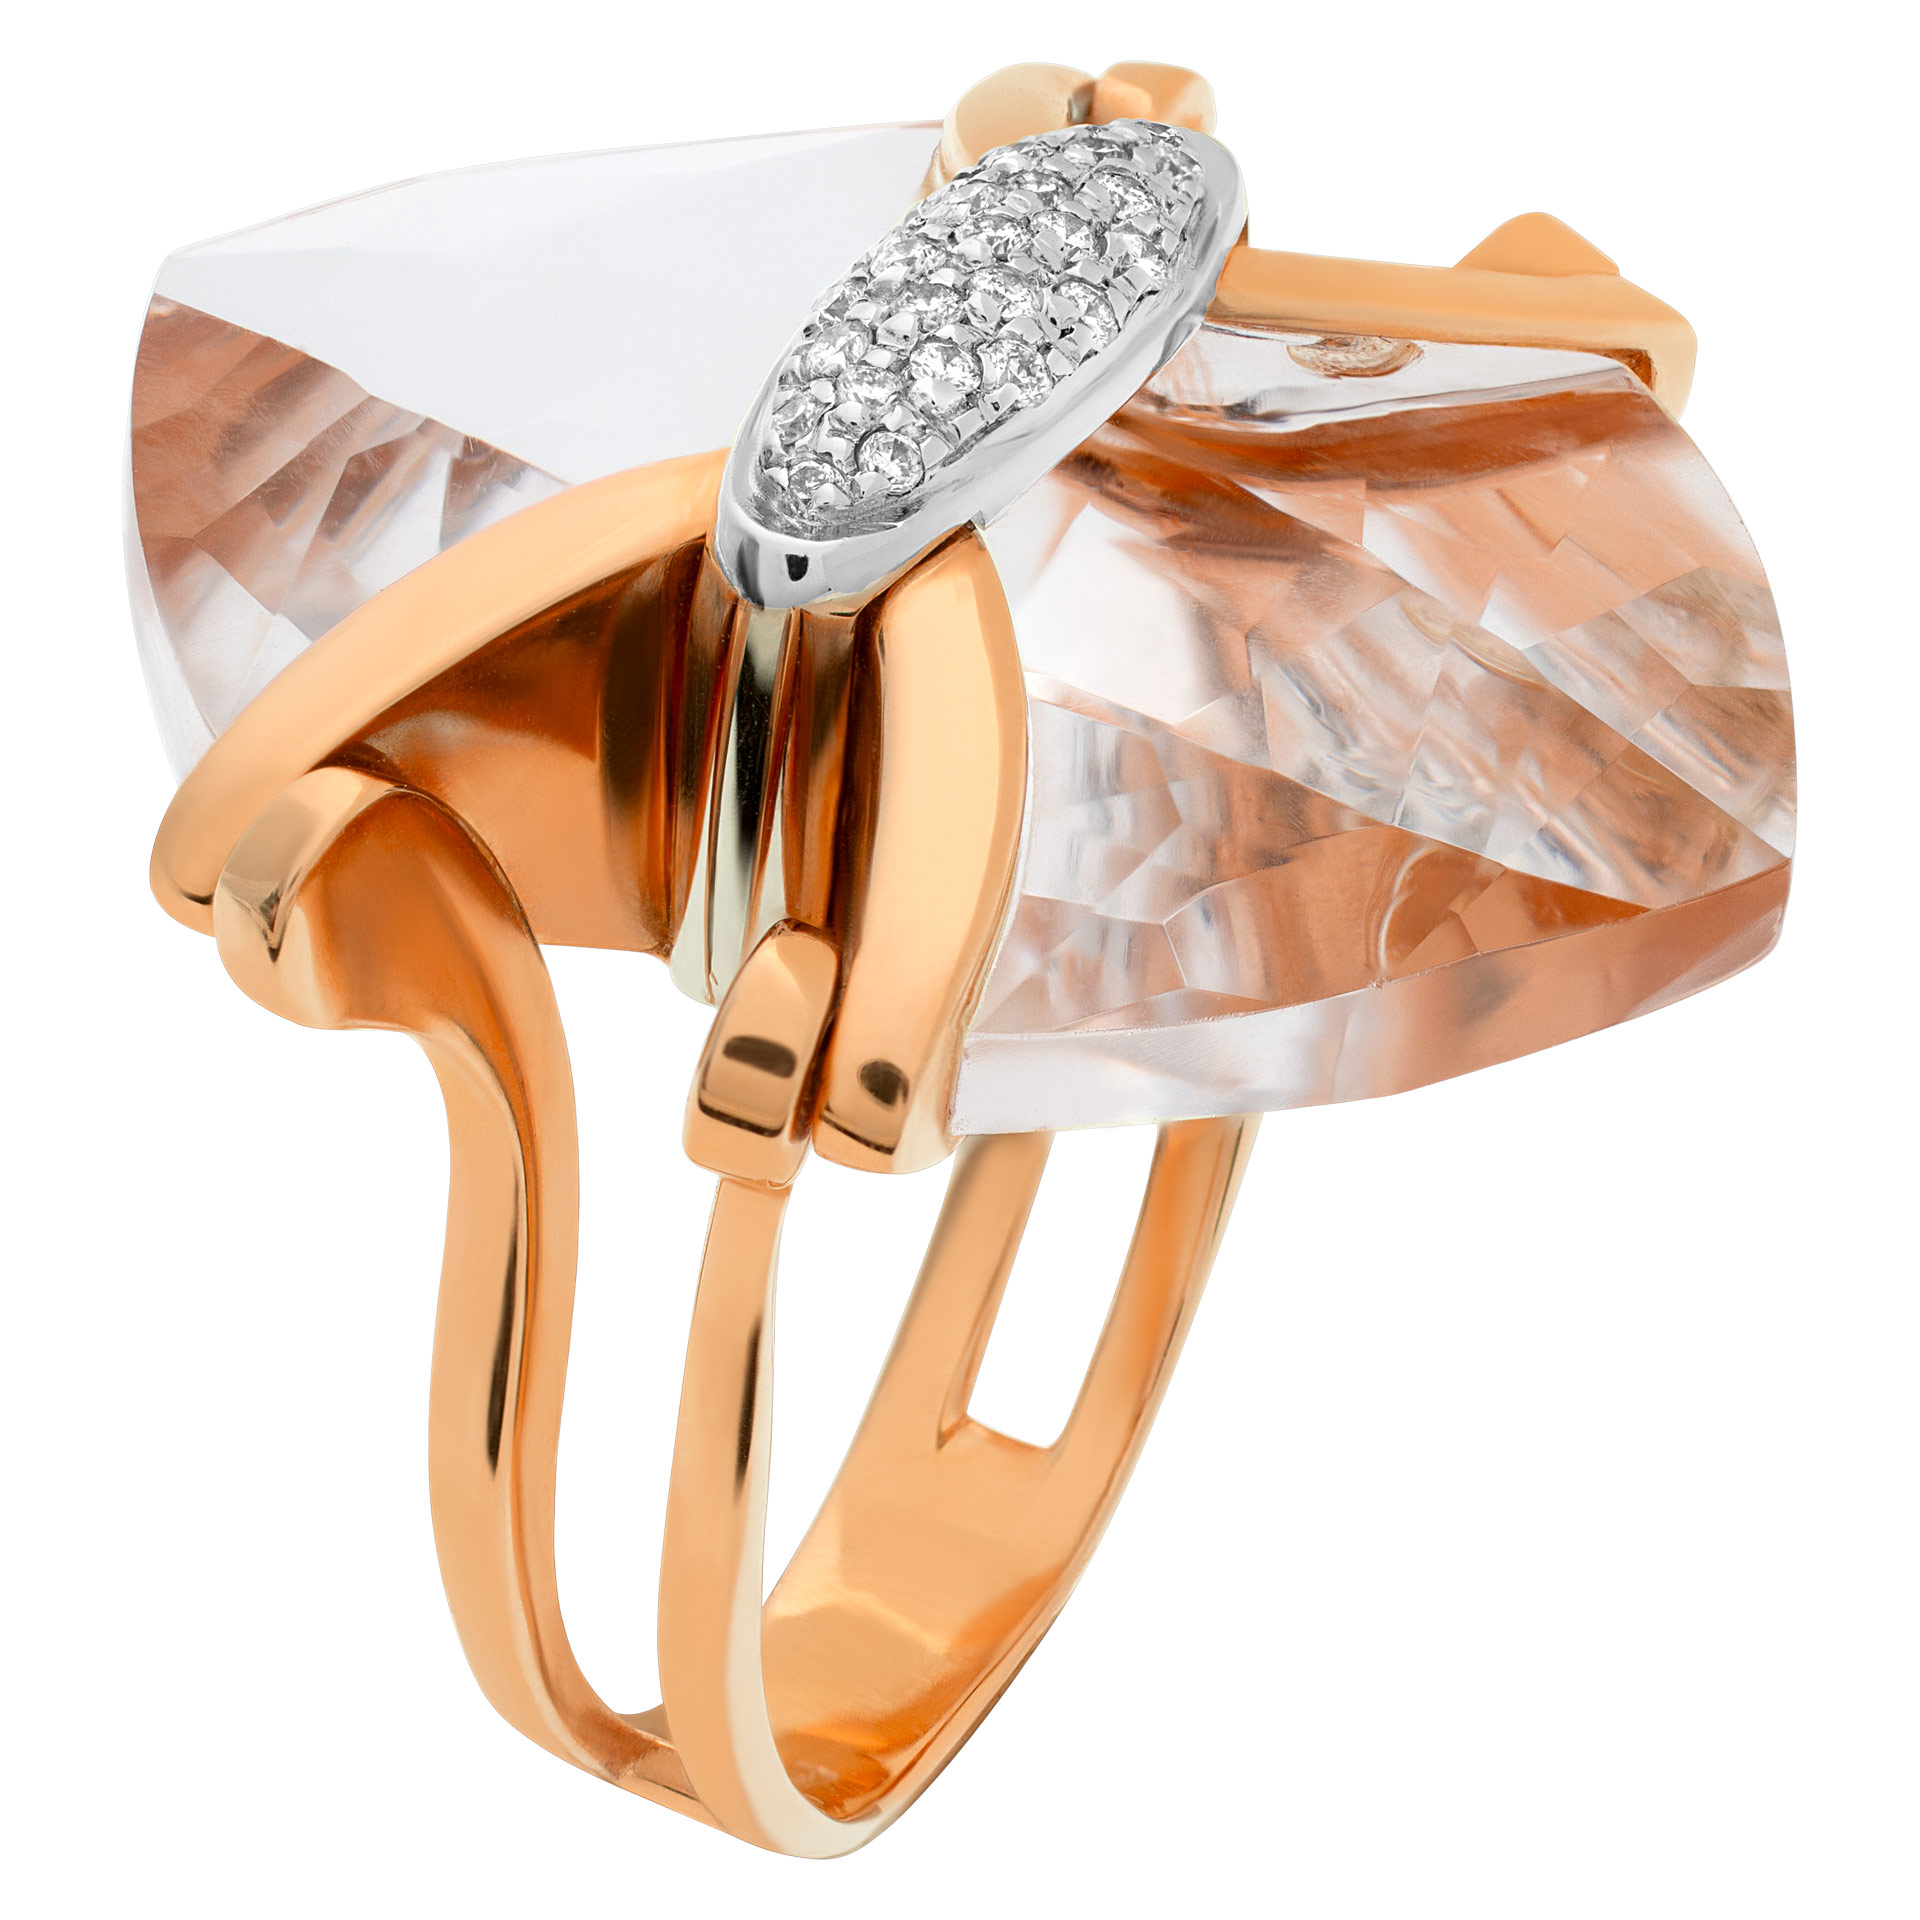 Mesmerizing quartz & diamonds ring by Italian designer "Falcinelli", w 17 carats "arrow"  shape cut quartz & diamonds. image 2